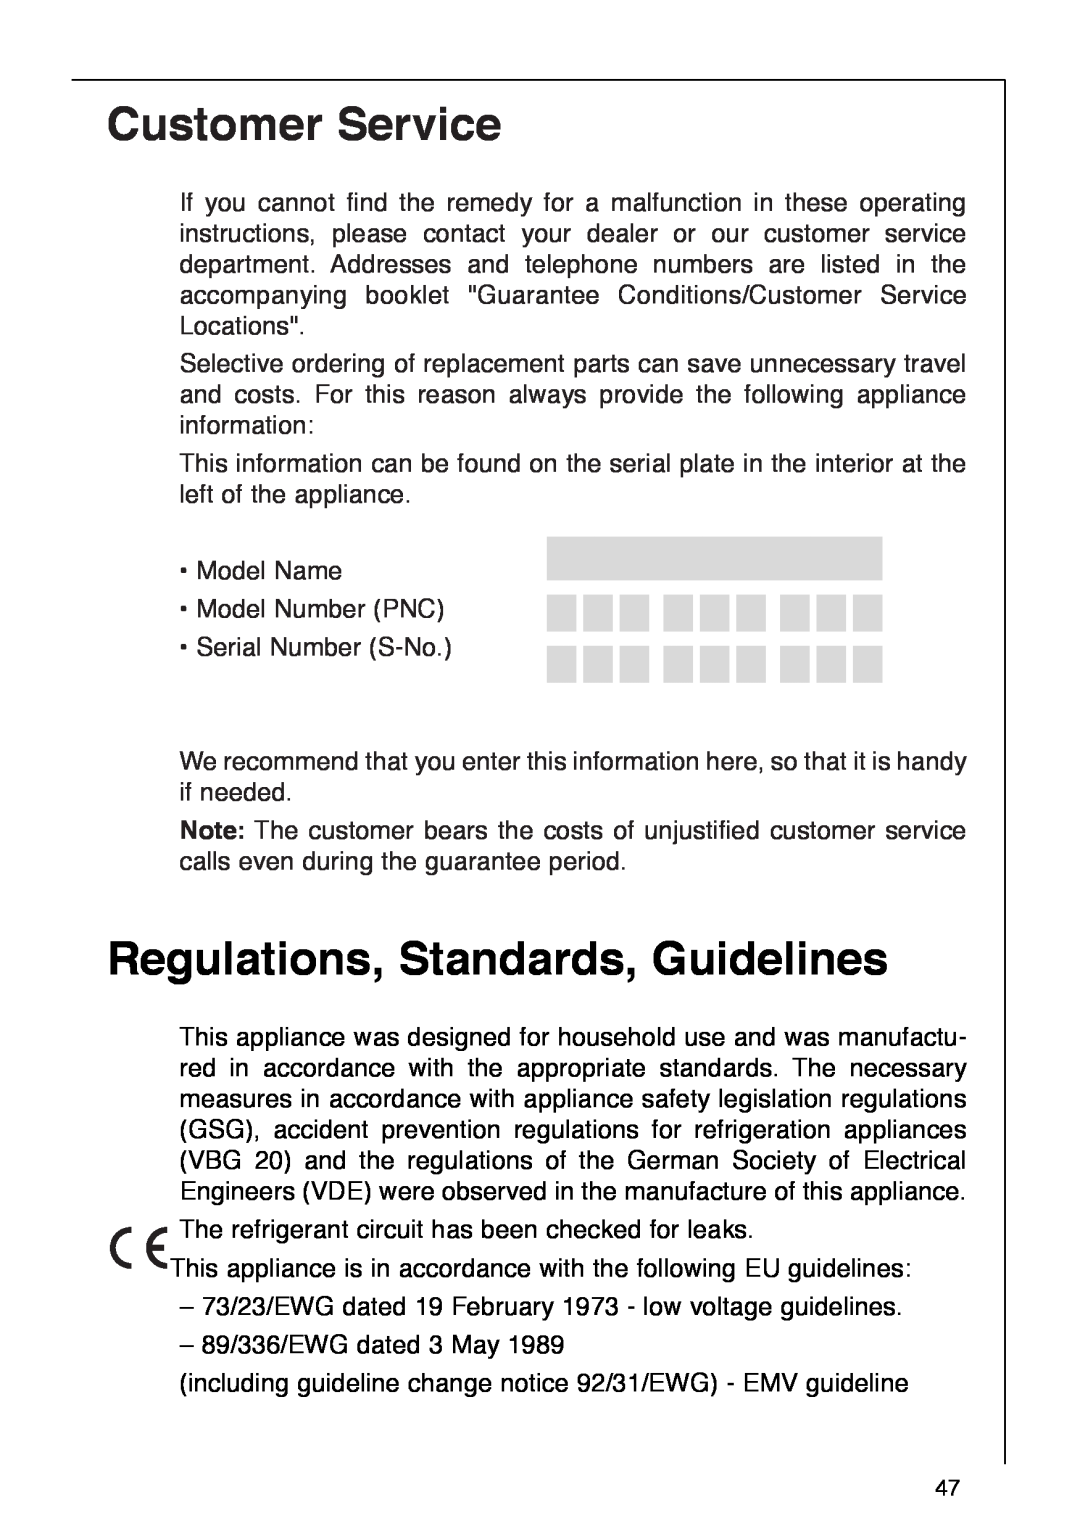 AEG 290-6I installation instructions Customer Service, Regulations, Standards, Guidelines 